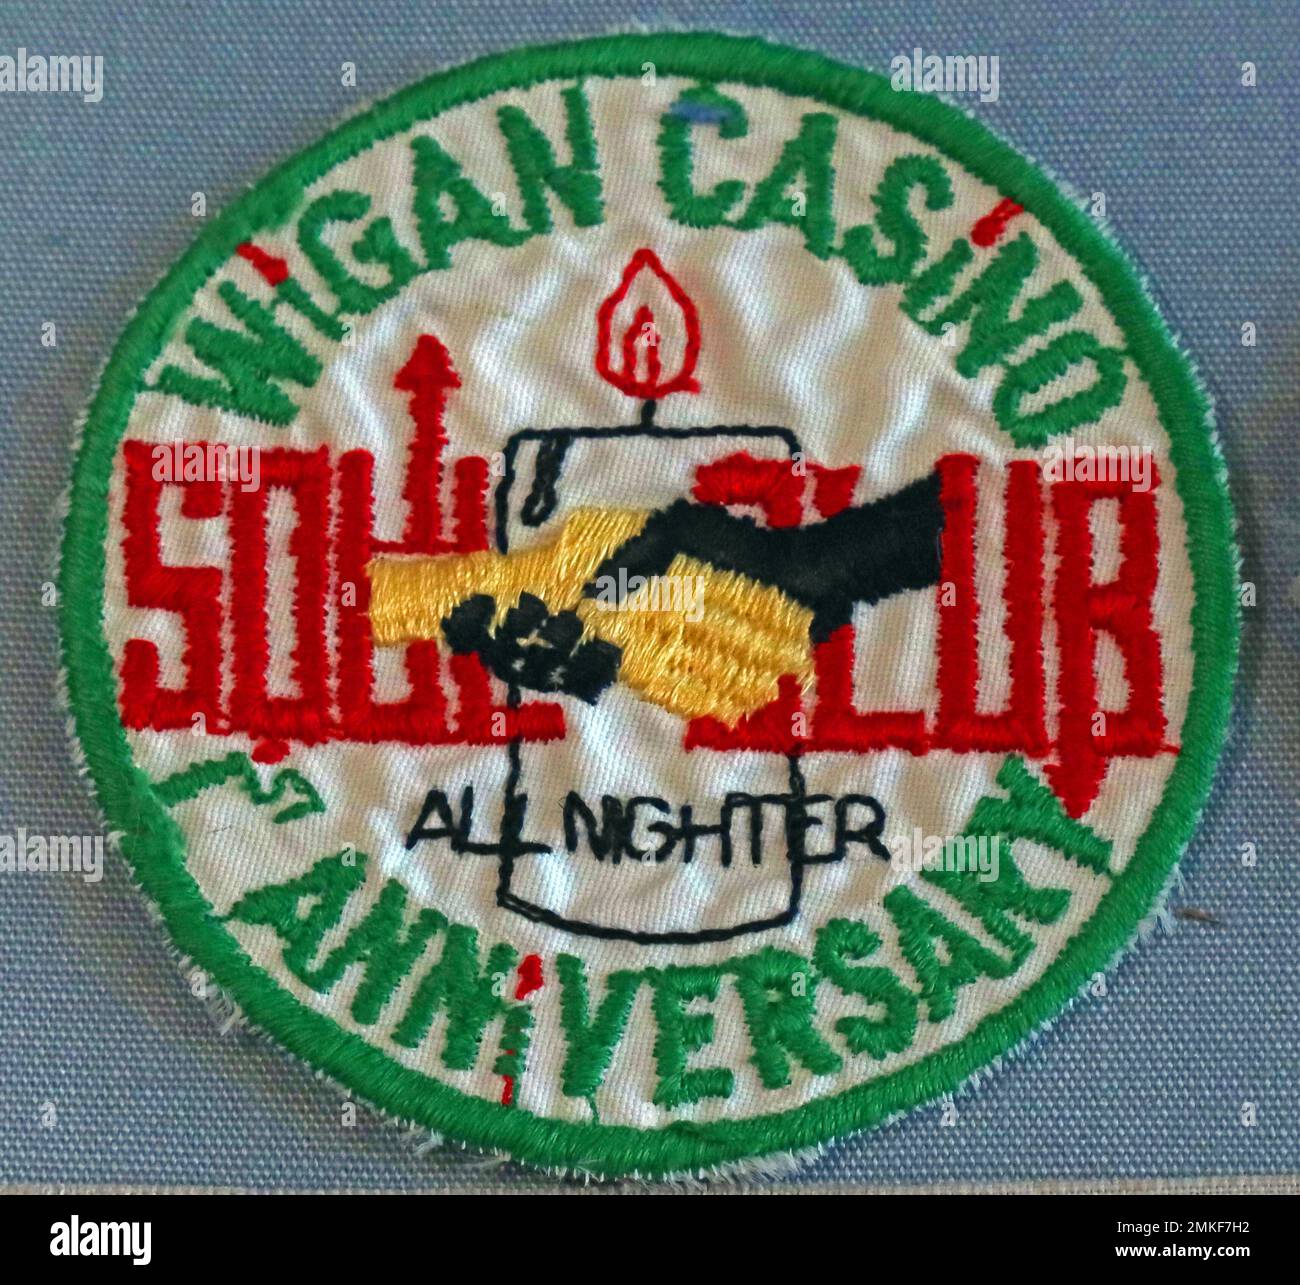 Wigan Casino Soul Club, First Anniversary sew on badge Stock Photo